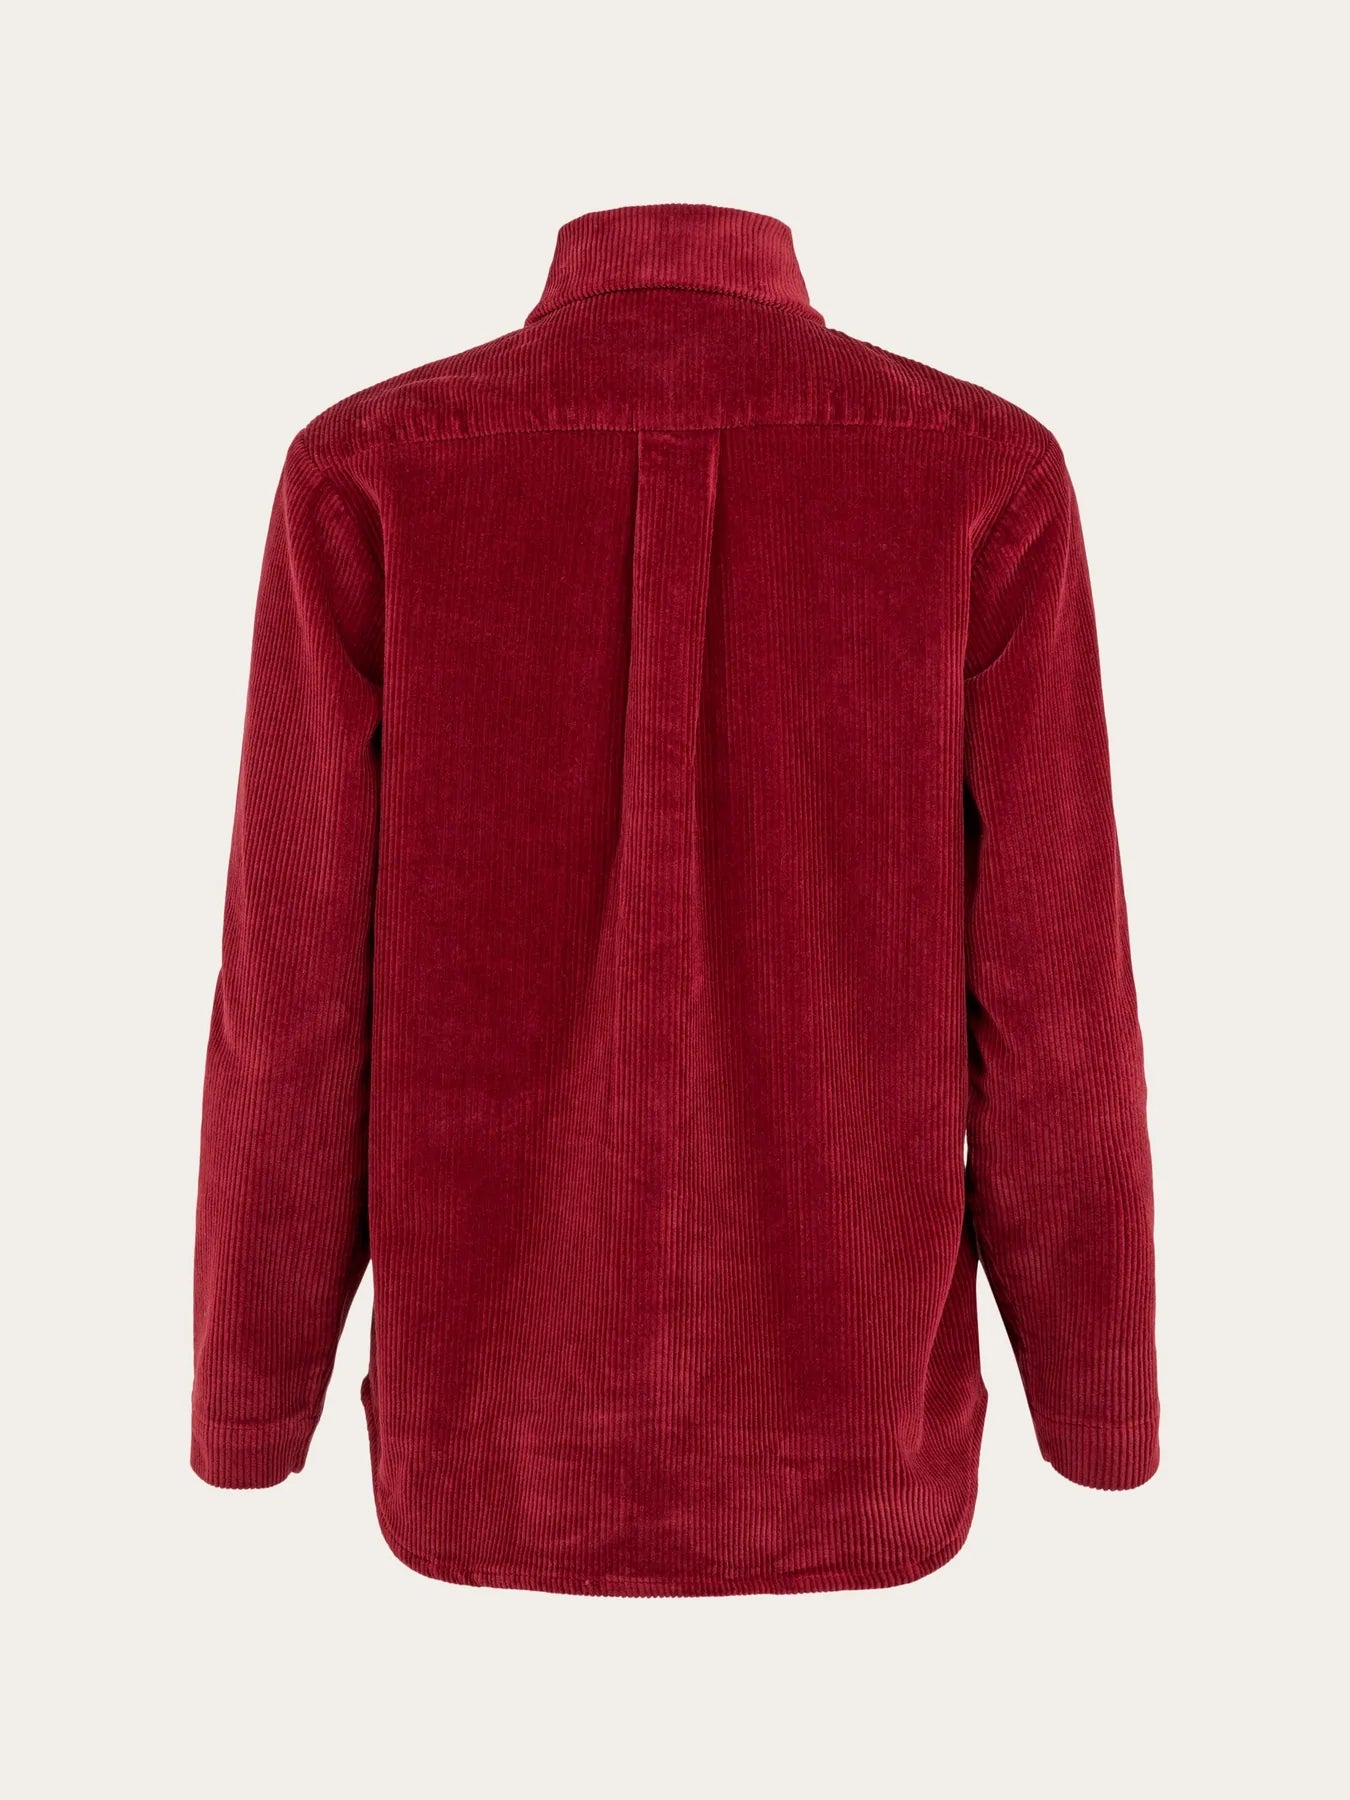 Knowledge Cotton Apparel red overshirt - 8-wales corduroy overshirt rhubarb